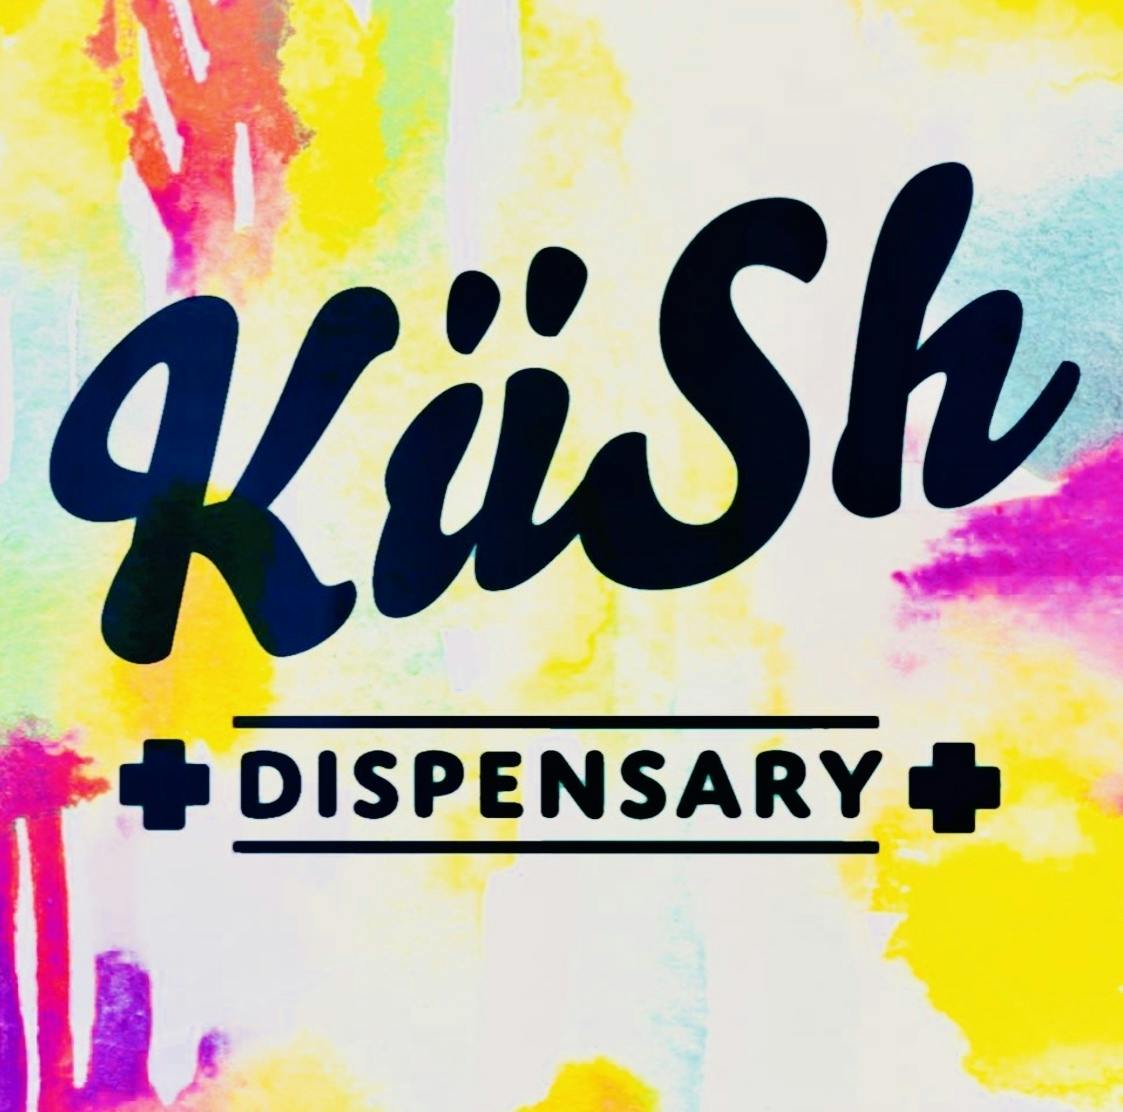 Kush Dispensary logo